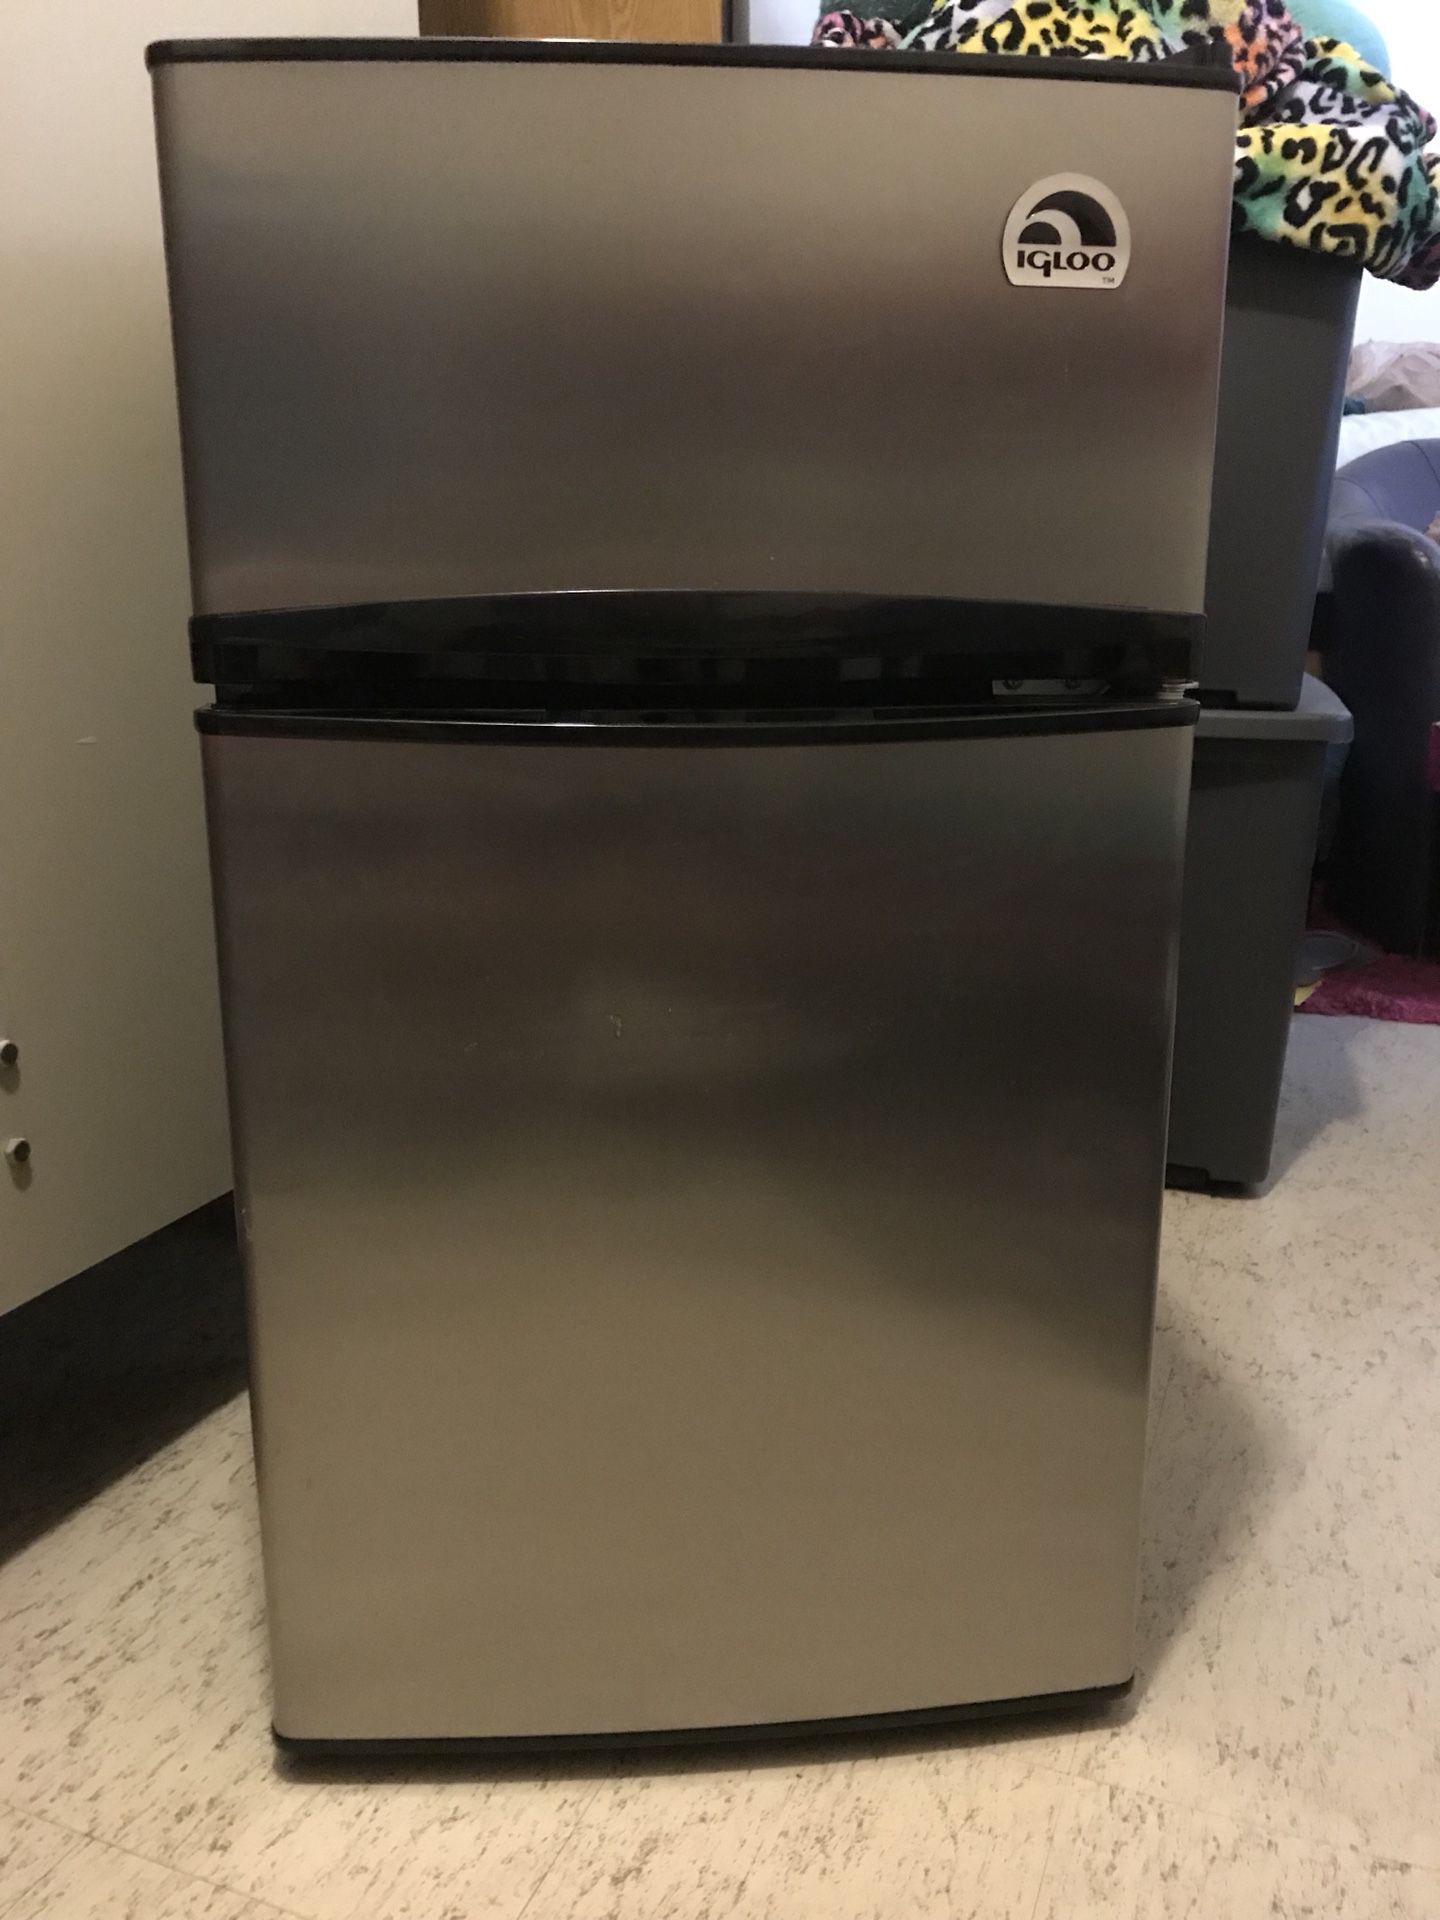 Igloo mini fridge and freezer refrigerator